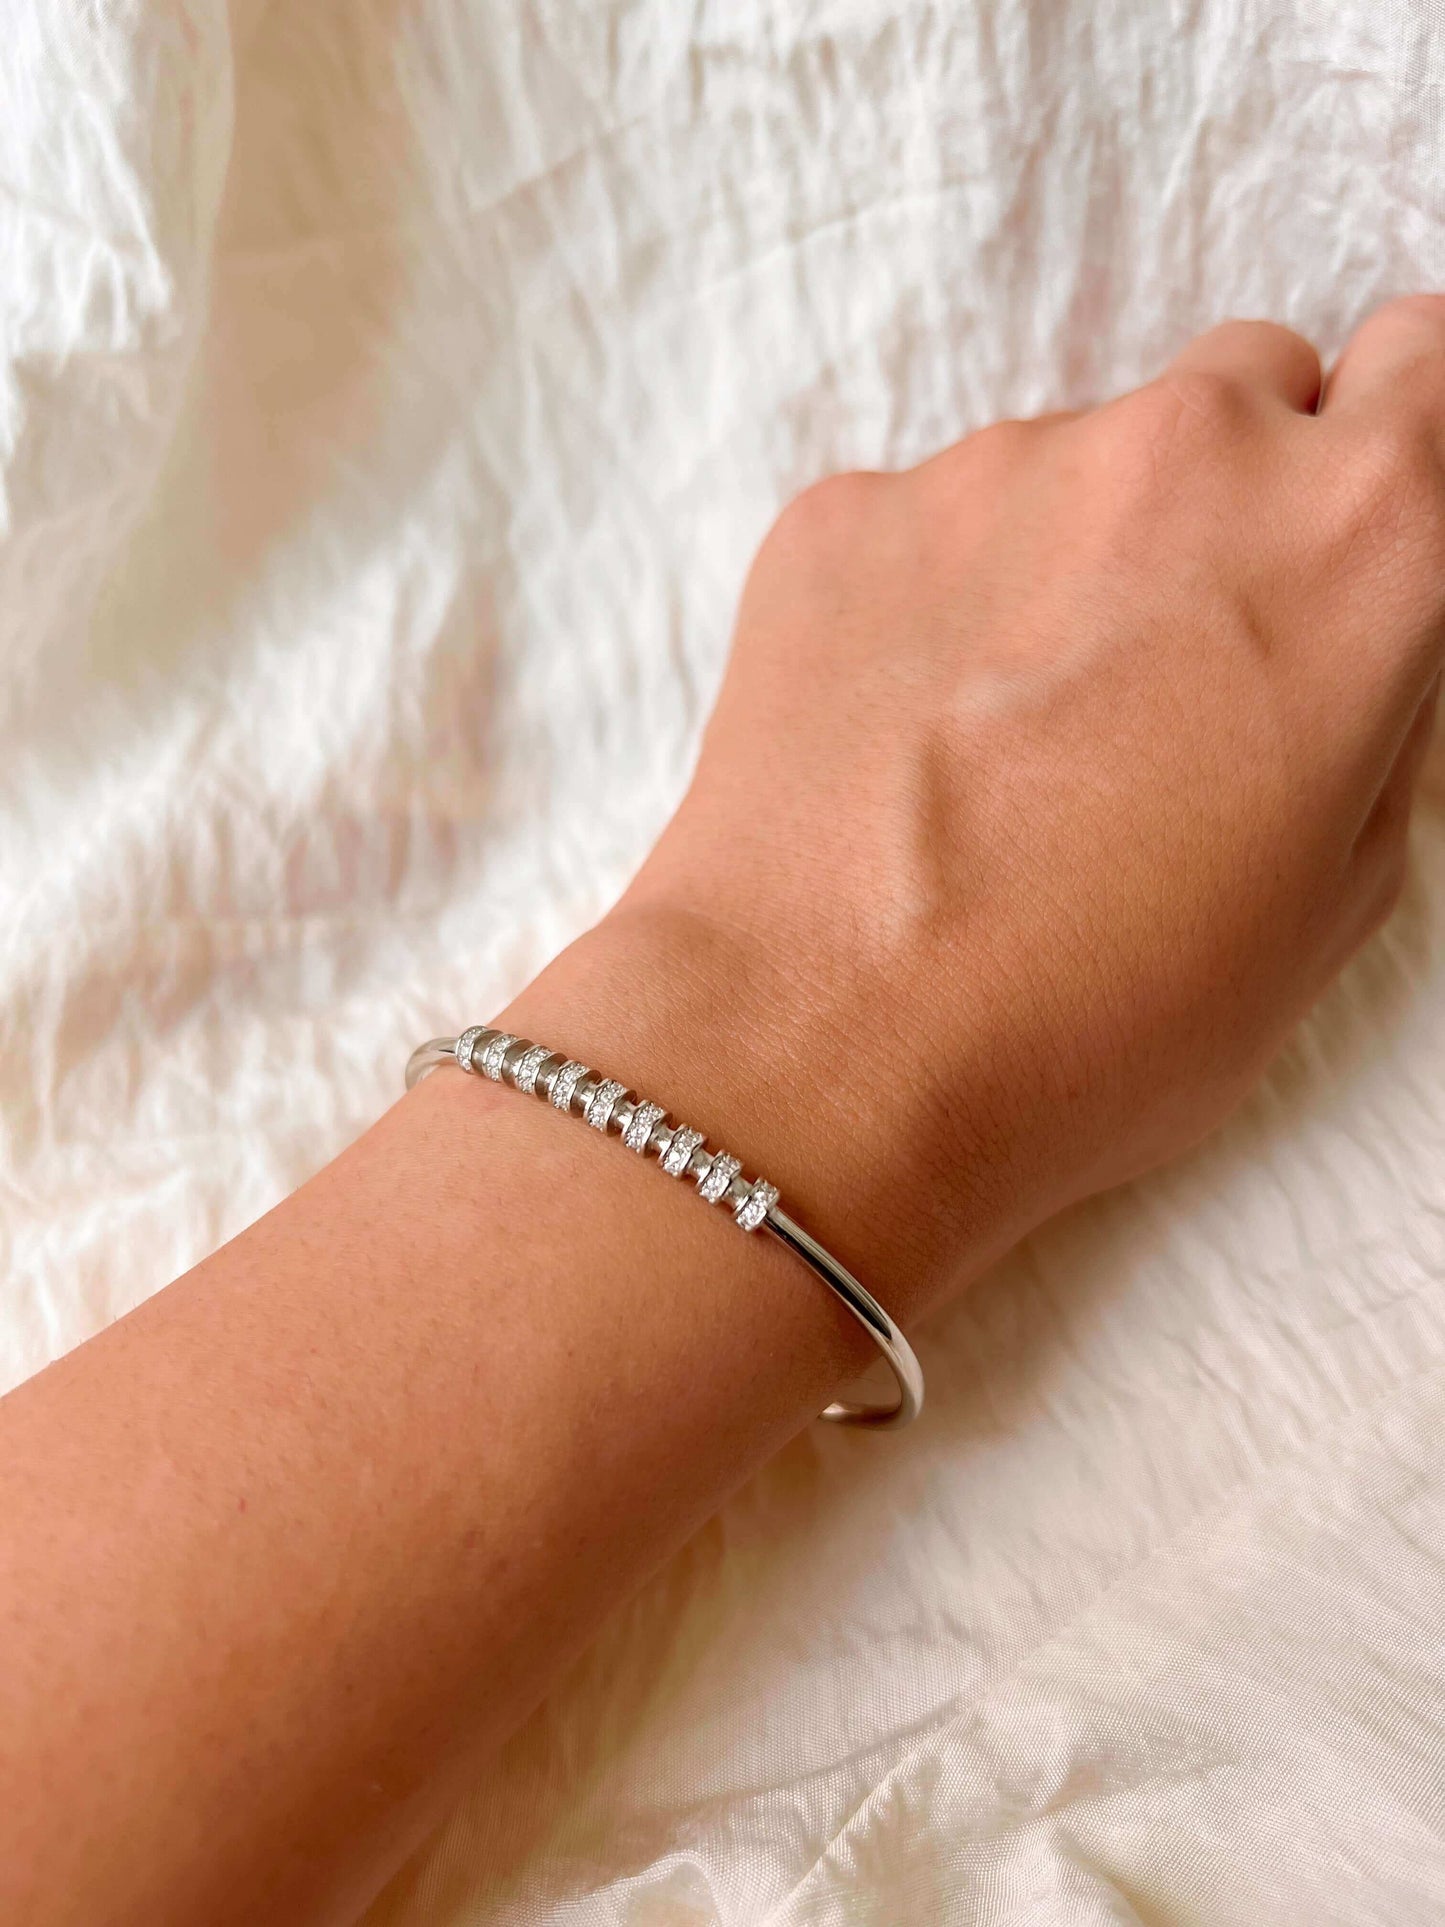 Twisty bracelet cuff in silver with zirconia